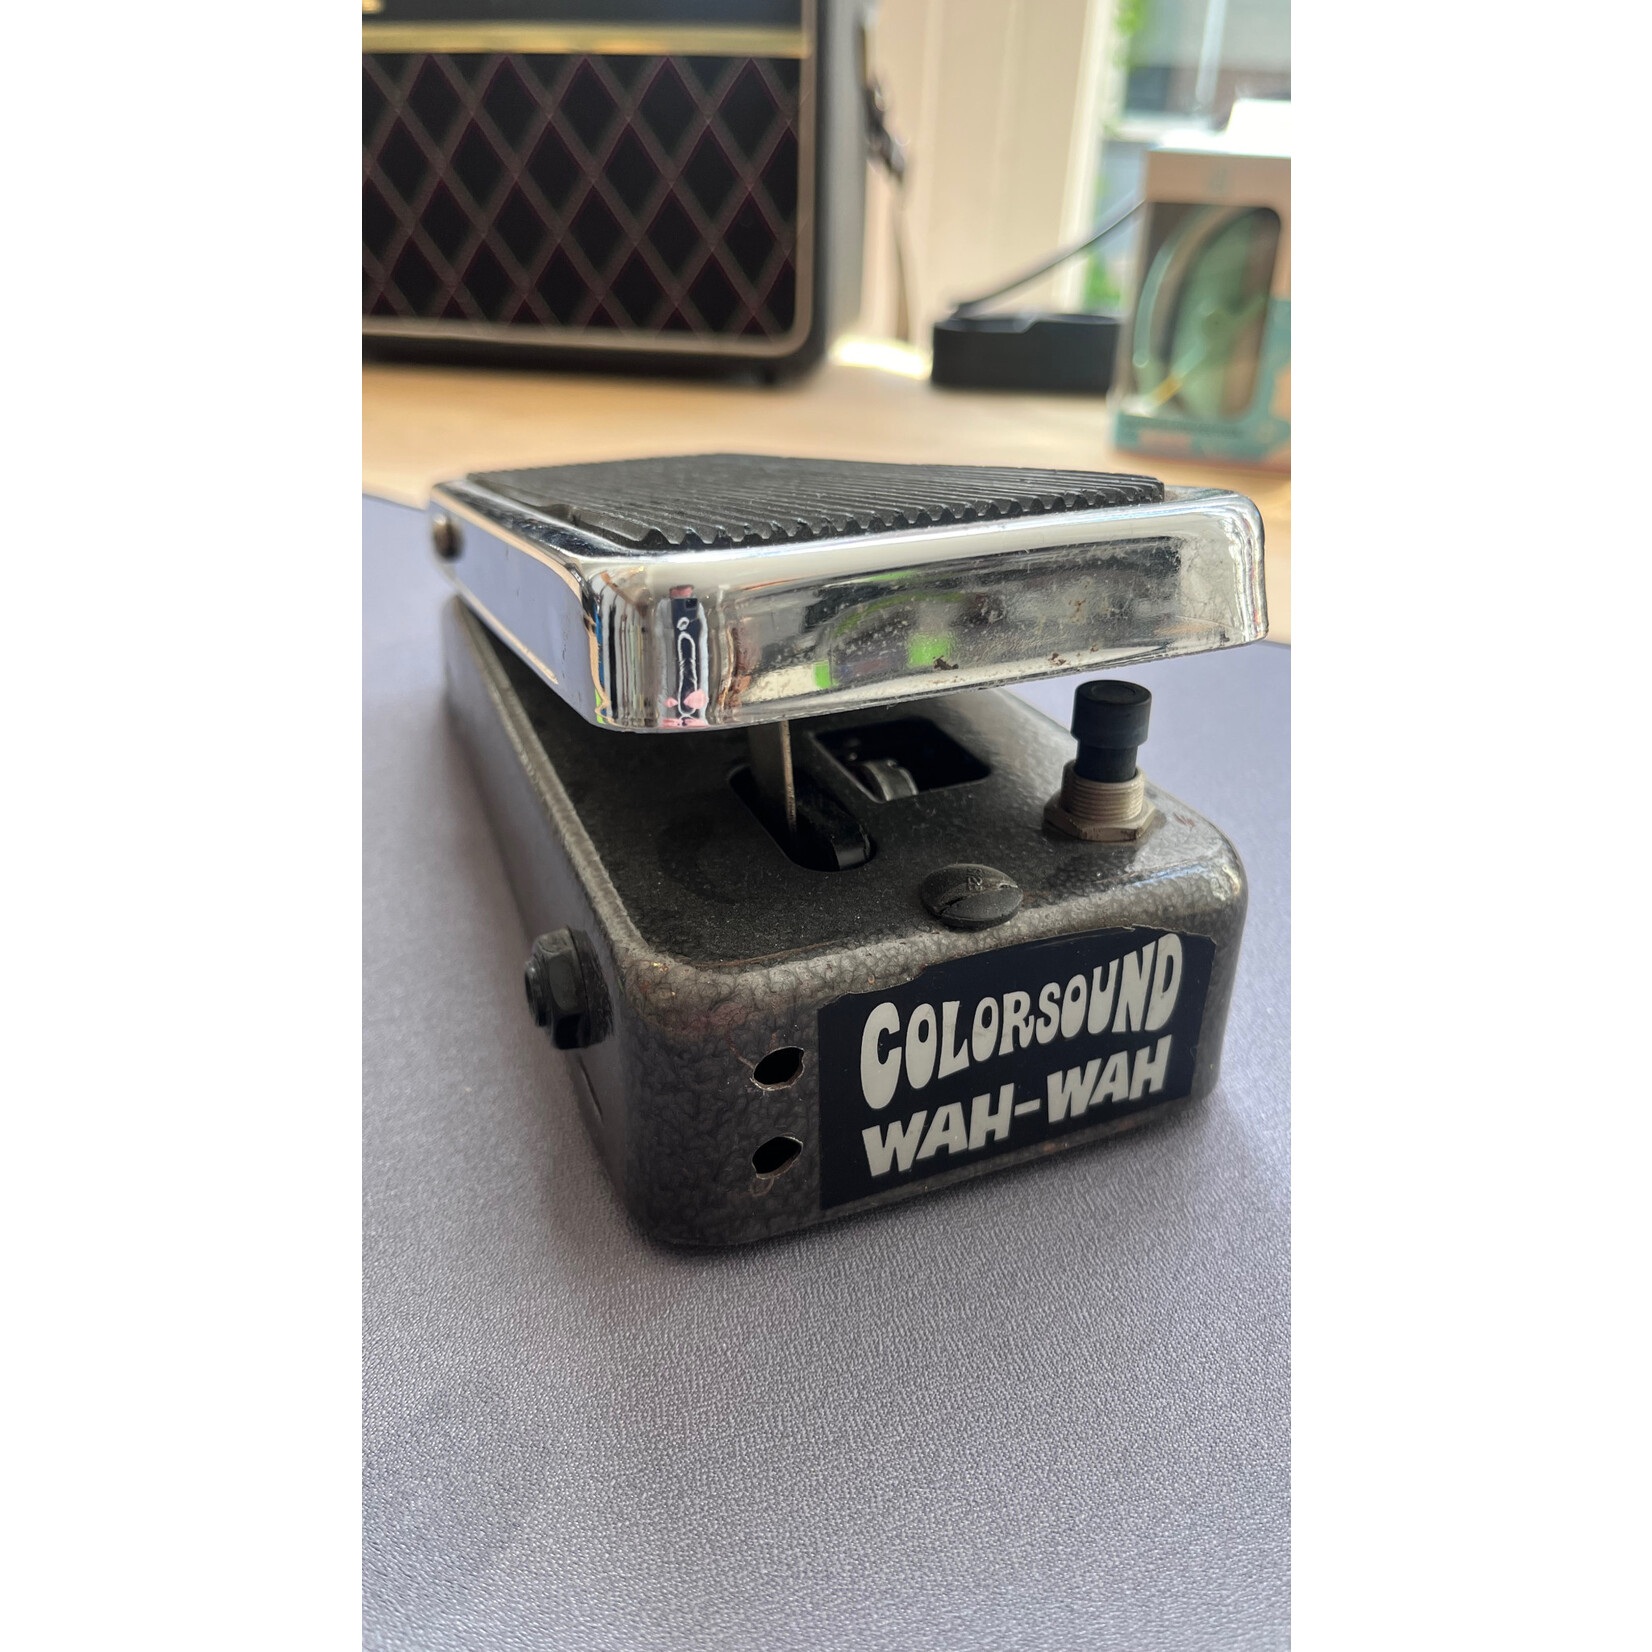 Colorsound Colorsound Wah, grey, vintage pedal, made in UK